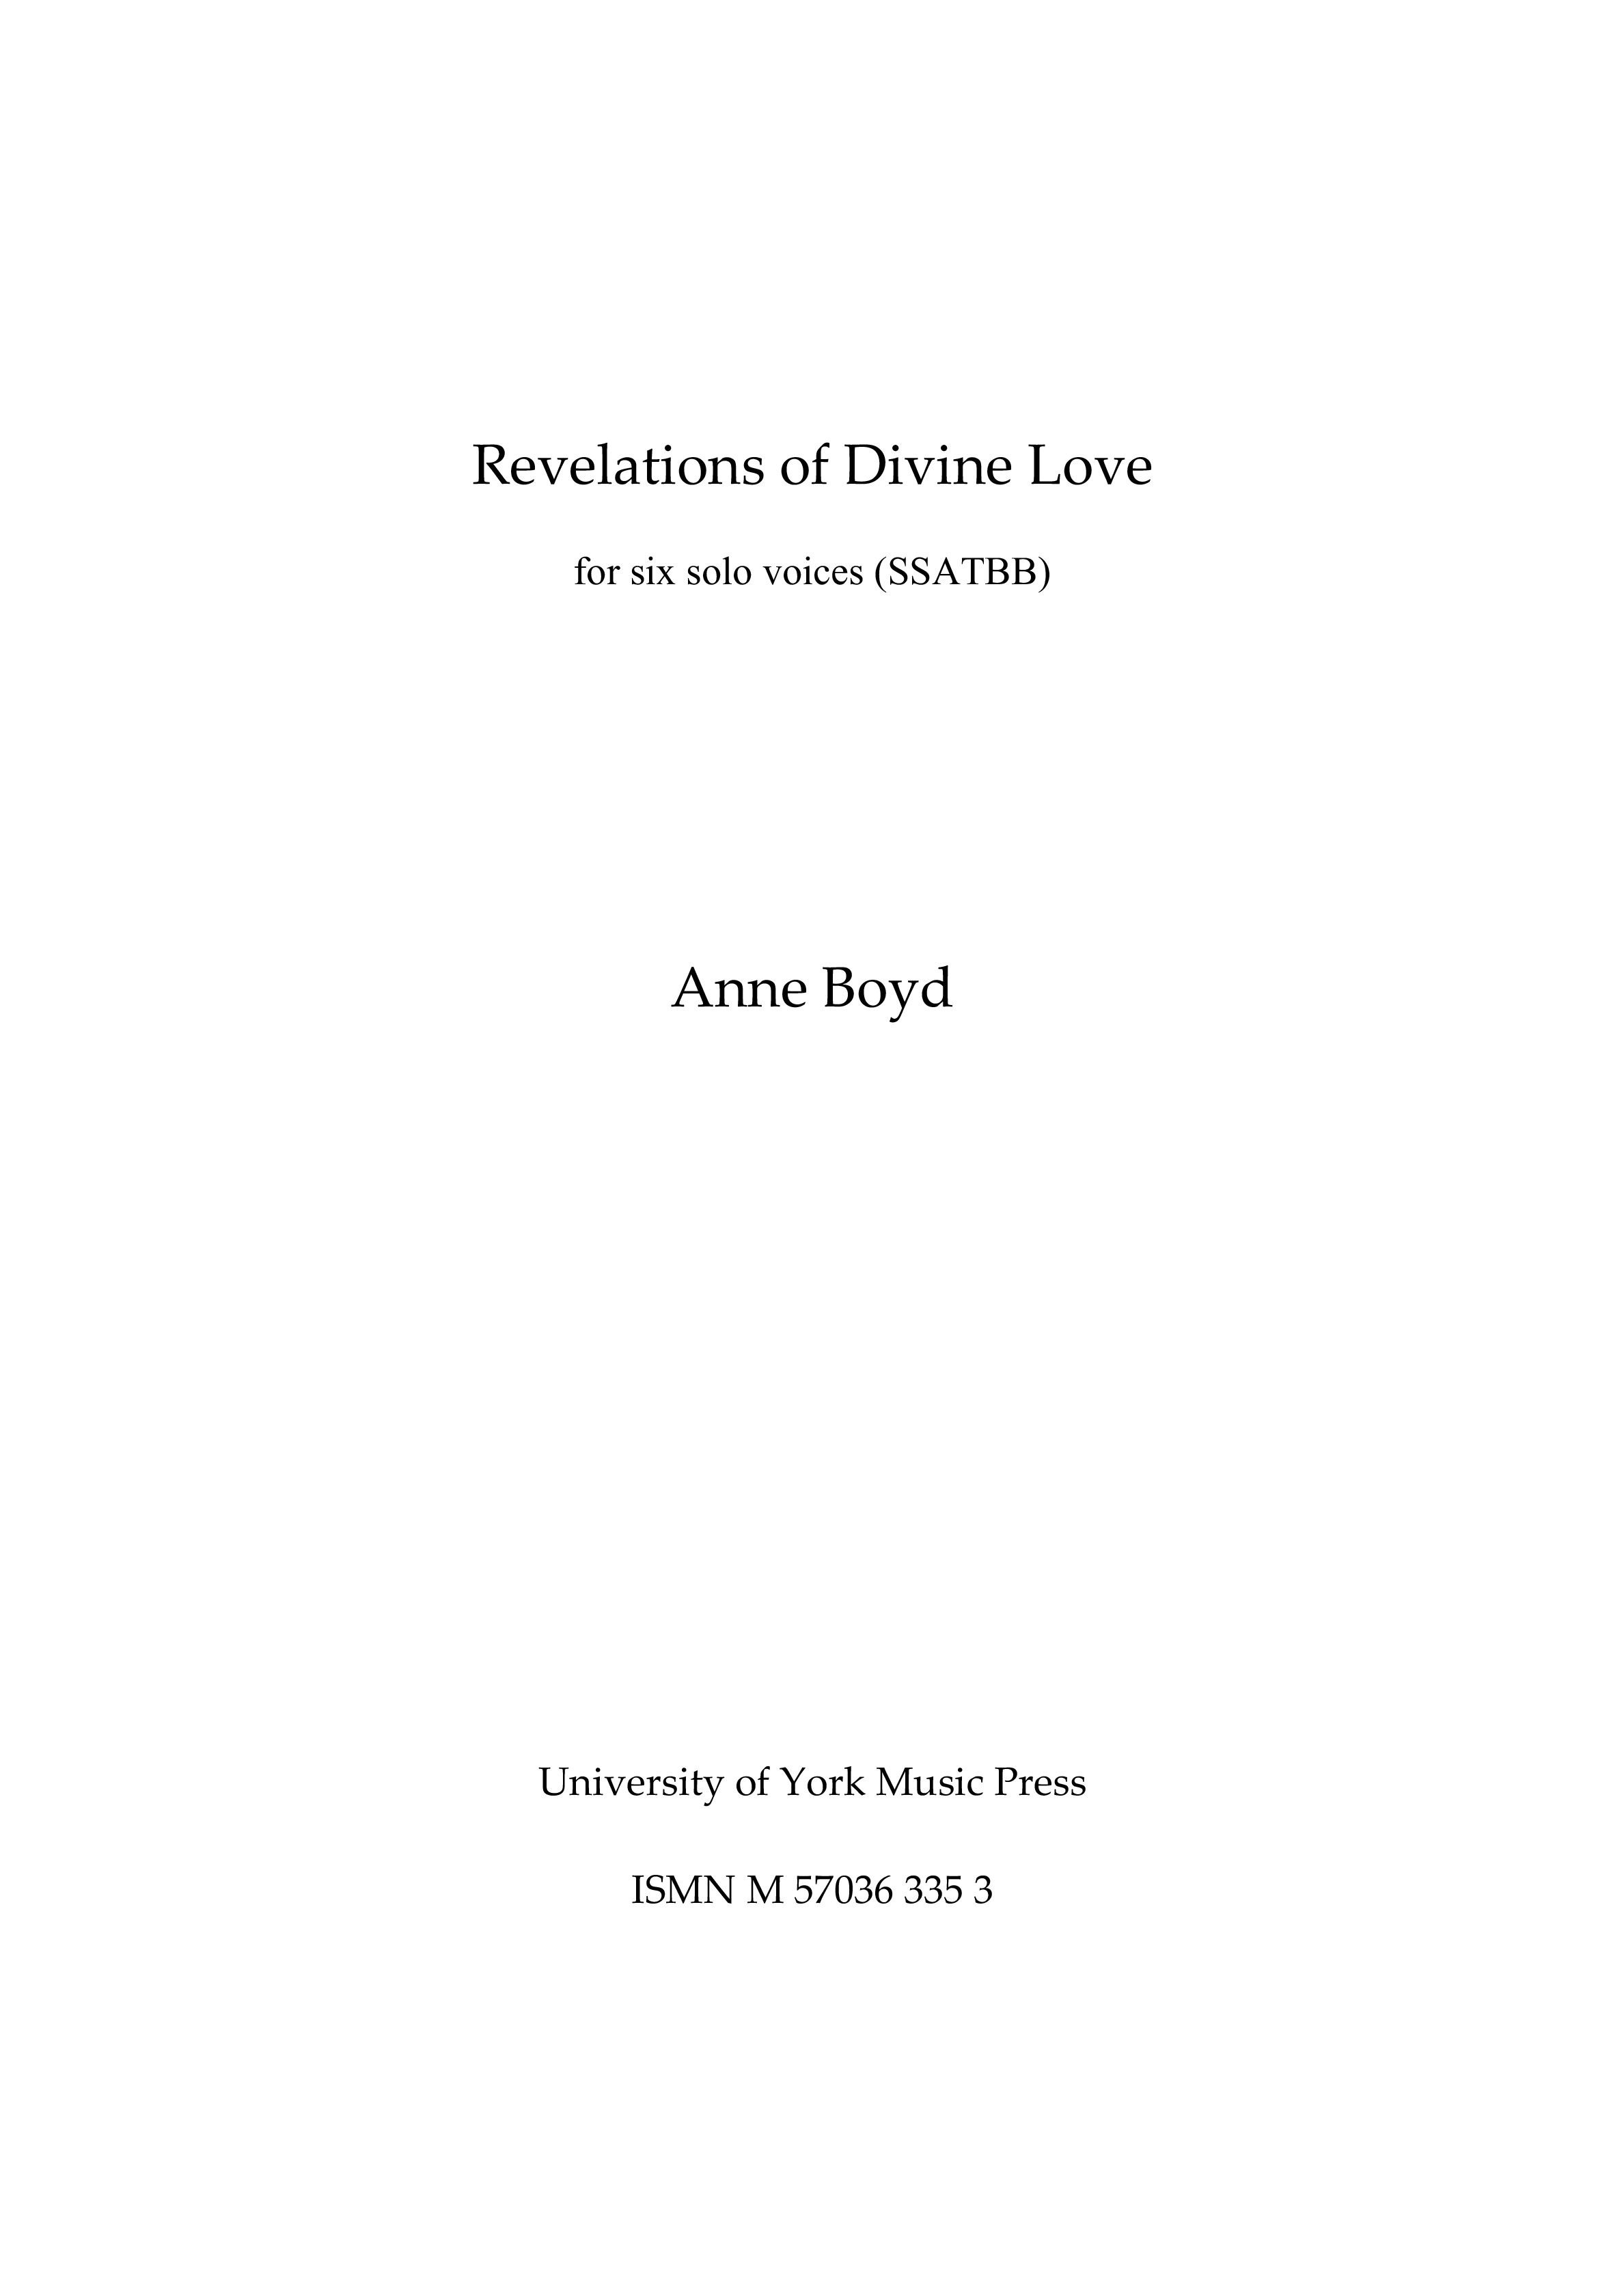 Anne Boyd: Revelations Of Divine Love: SATB: Vocal Score